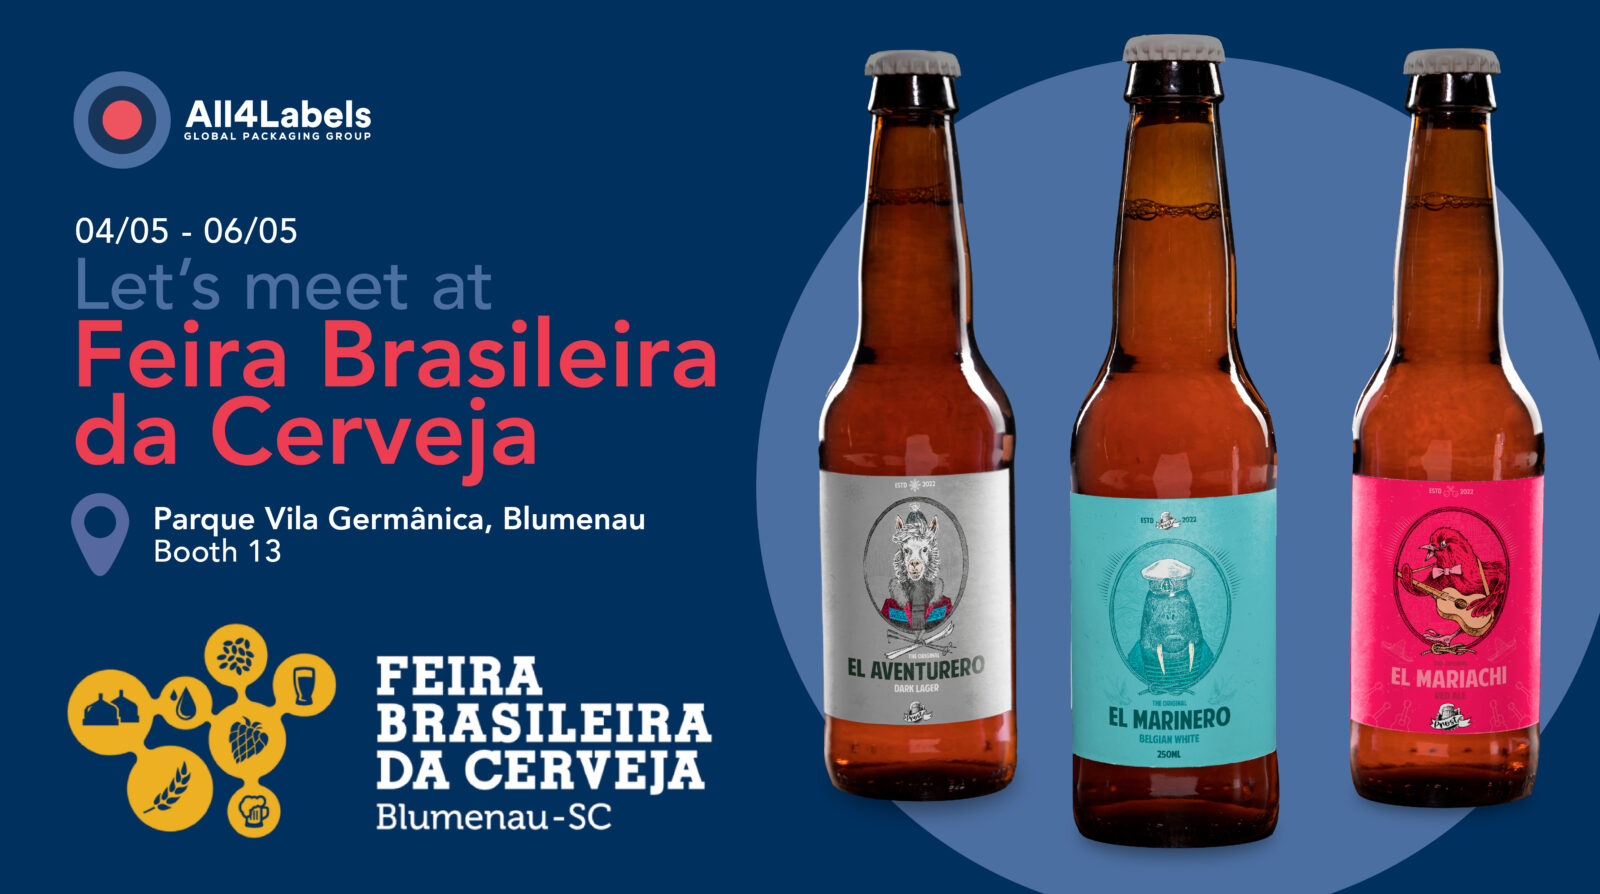 All4Labels attends the Feira Brasileira da Cerveja 2022